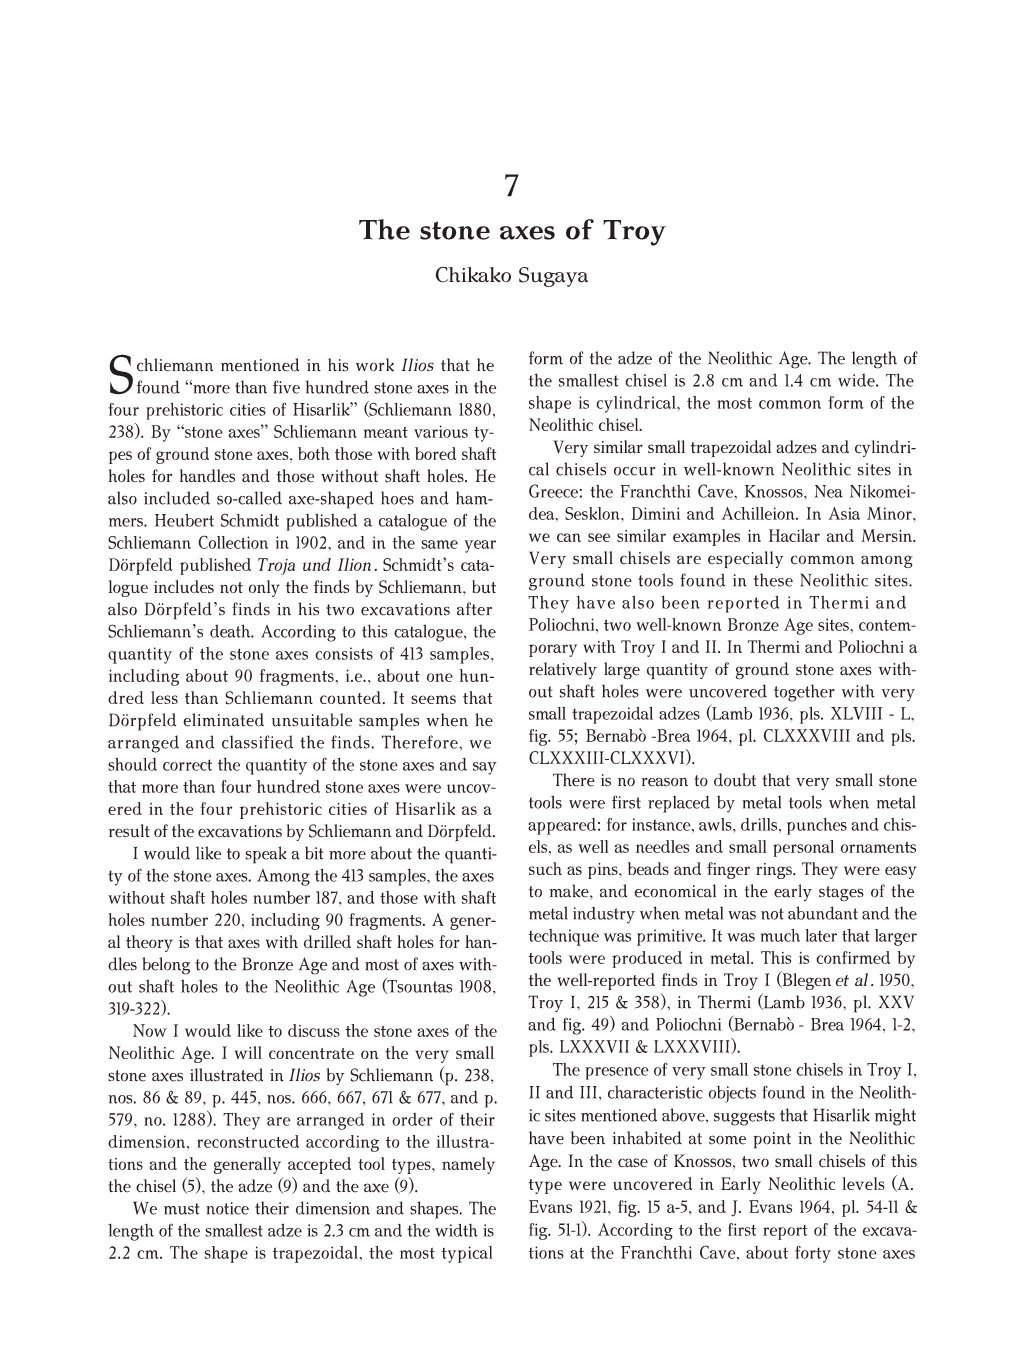 The Stone Axes of Troy Chikako Sugaya